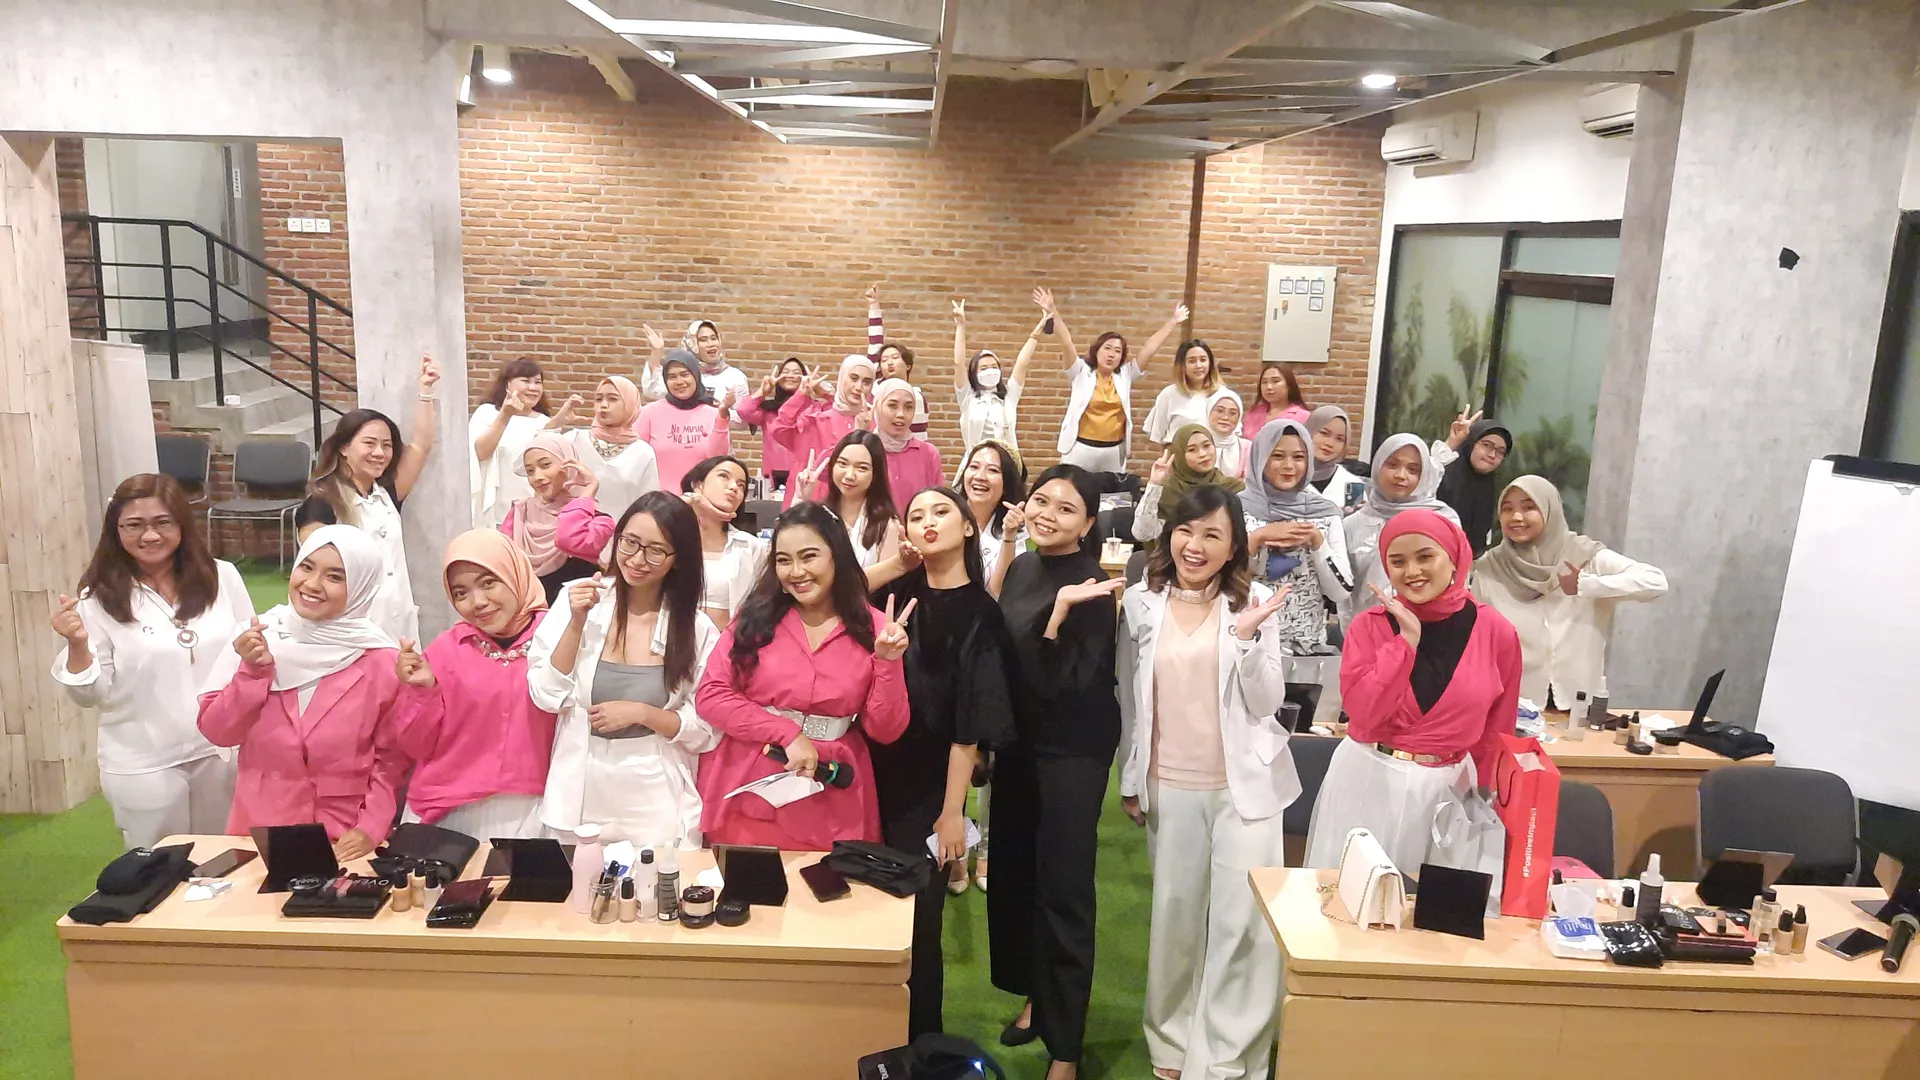 Popbela.com Adakan Bela’s Day Out untuk Pertama Kalinya di Surabaya